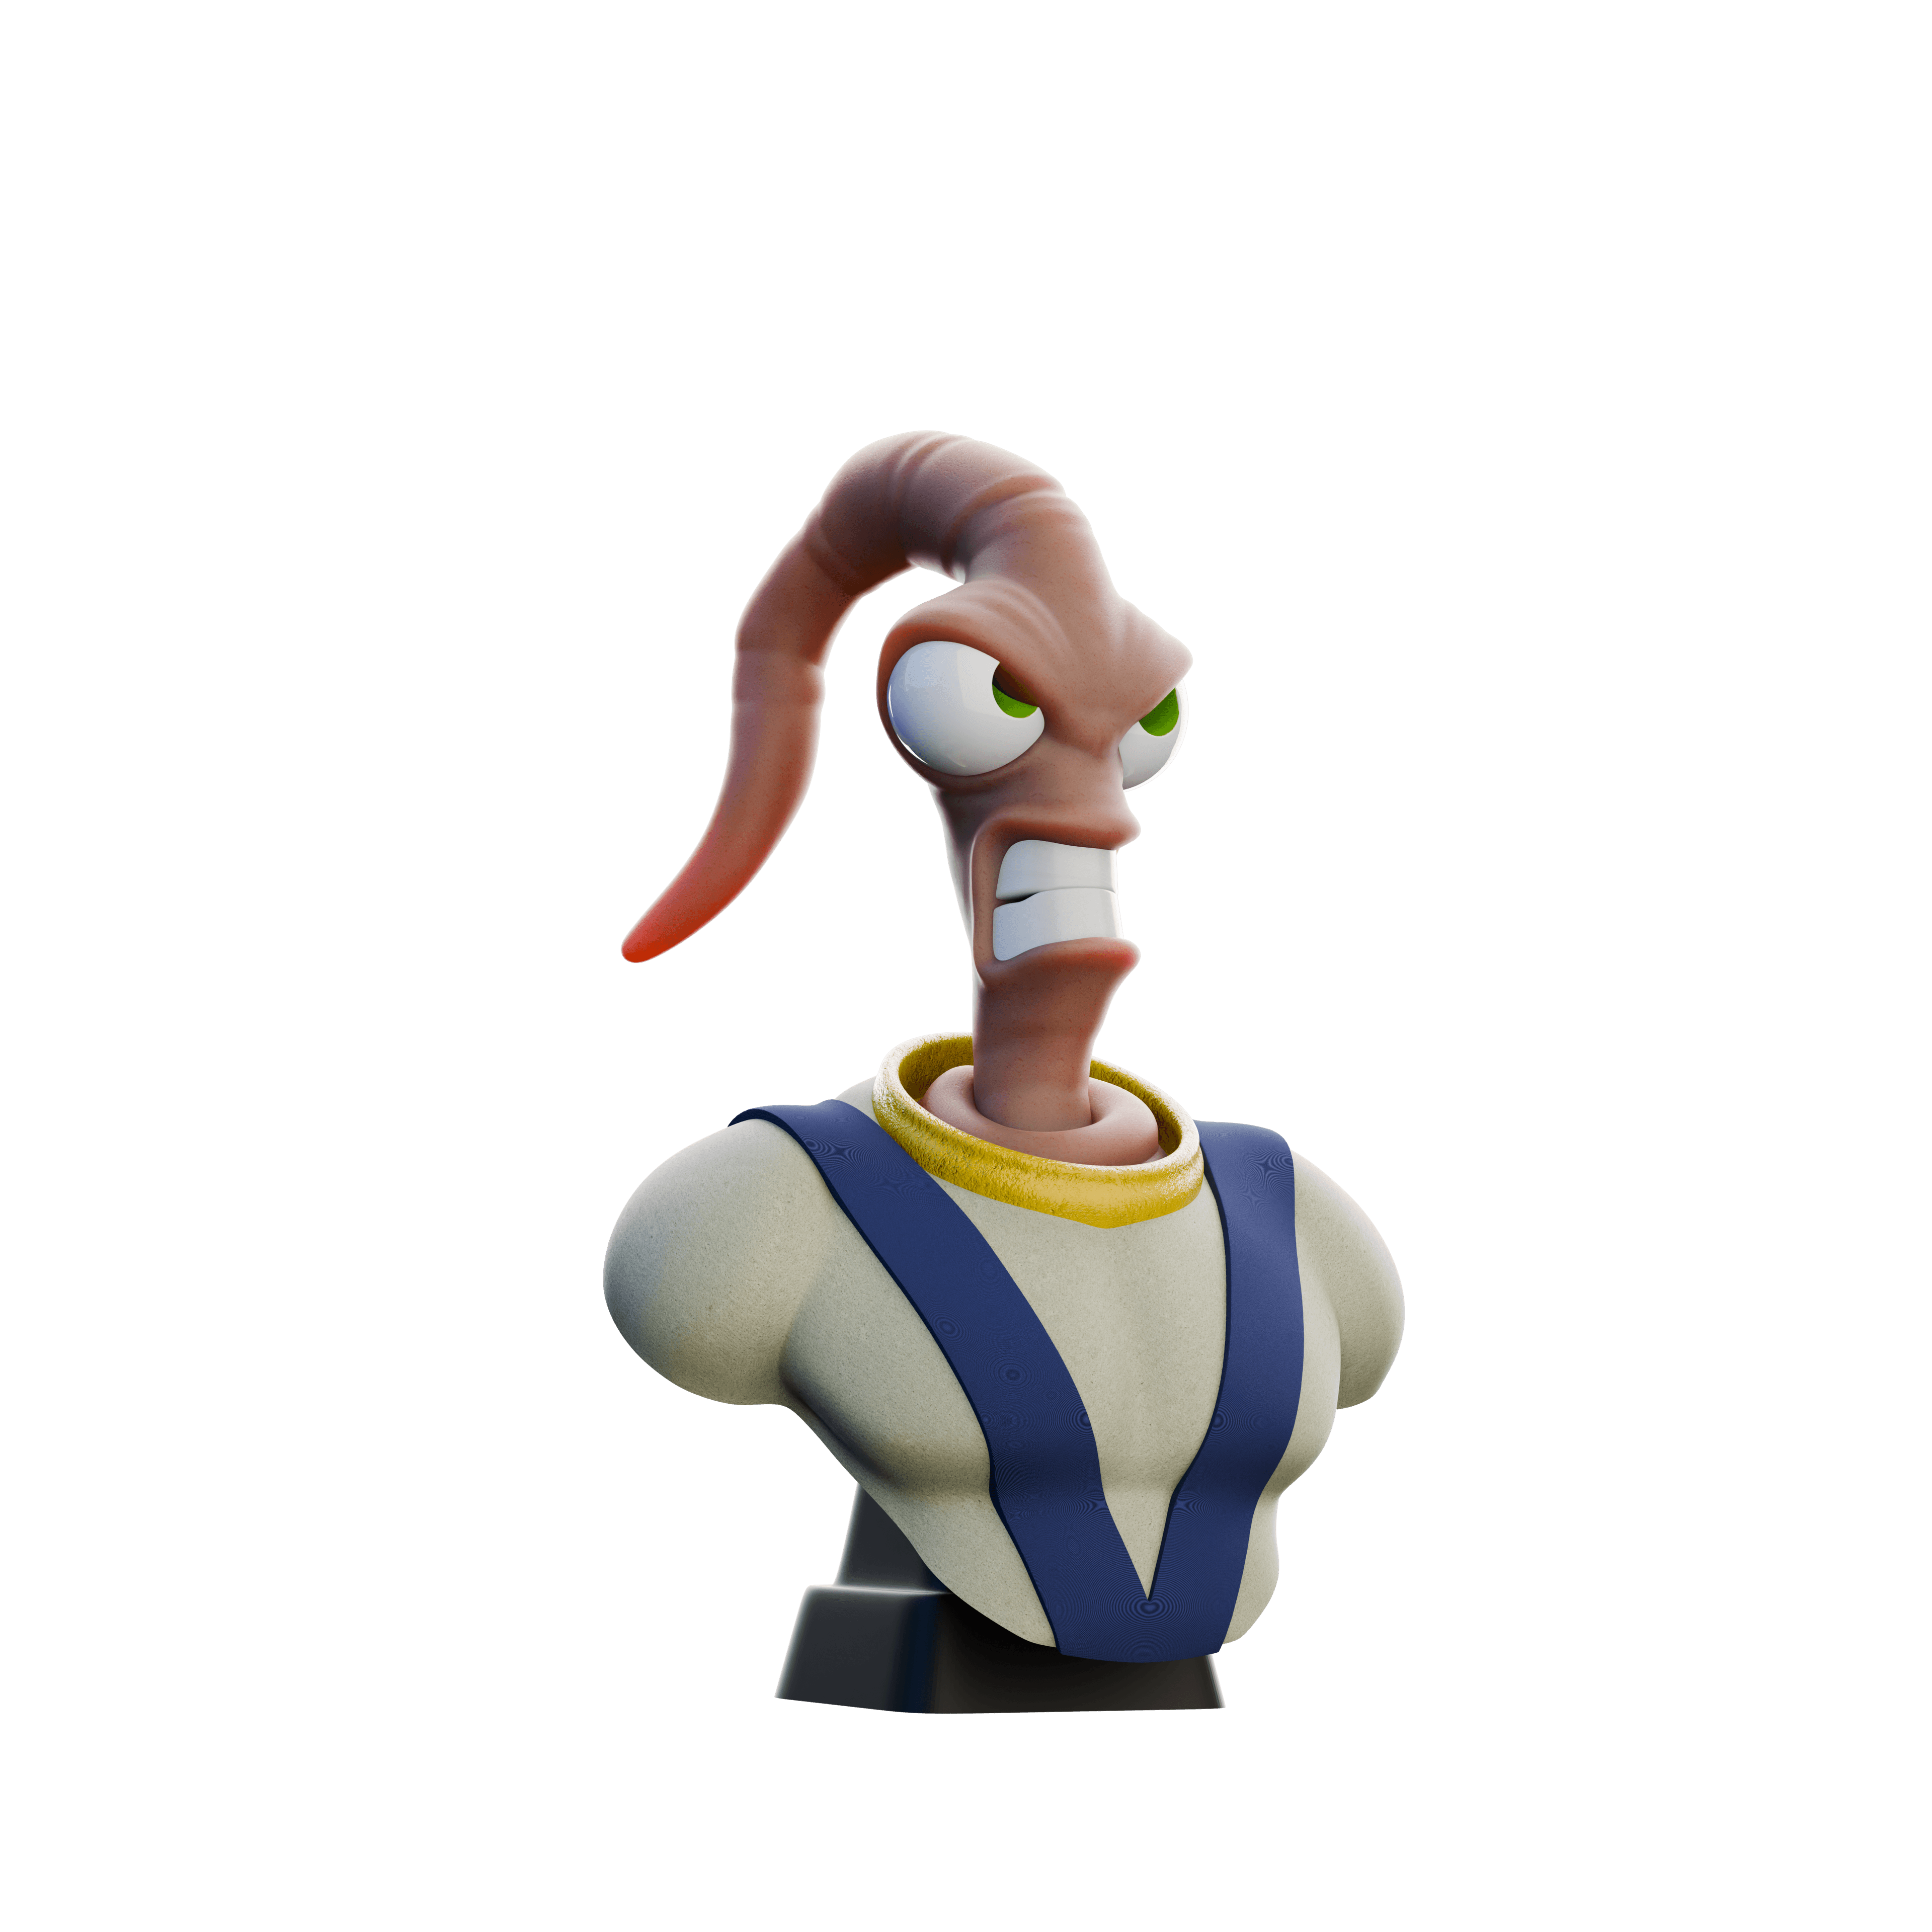 Earthworm Jim Bust  3d model